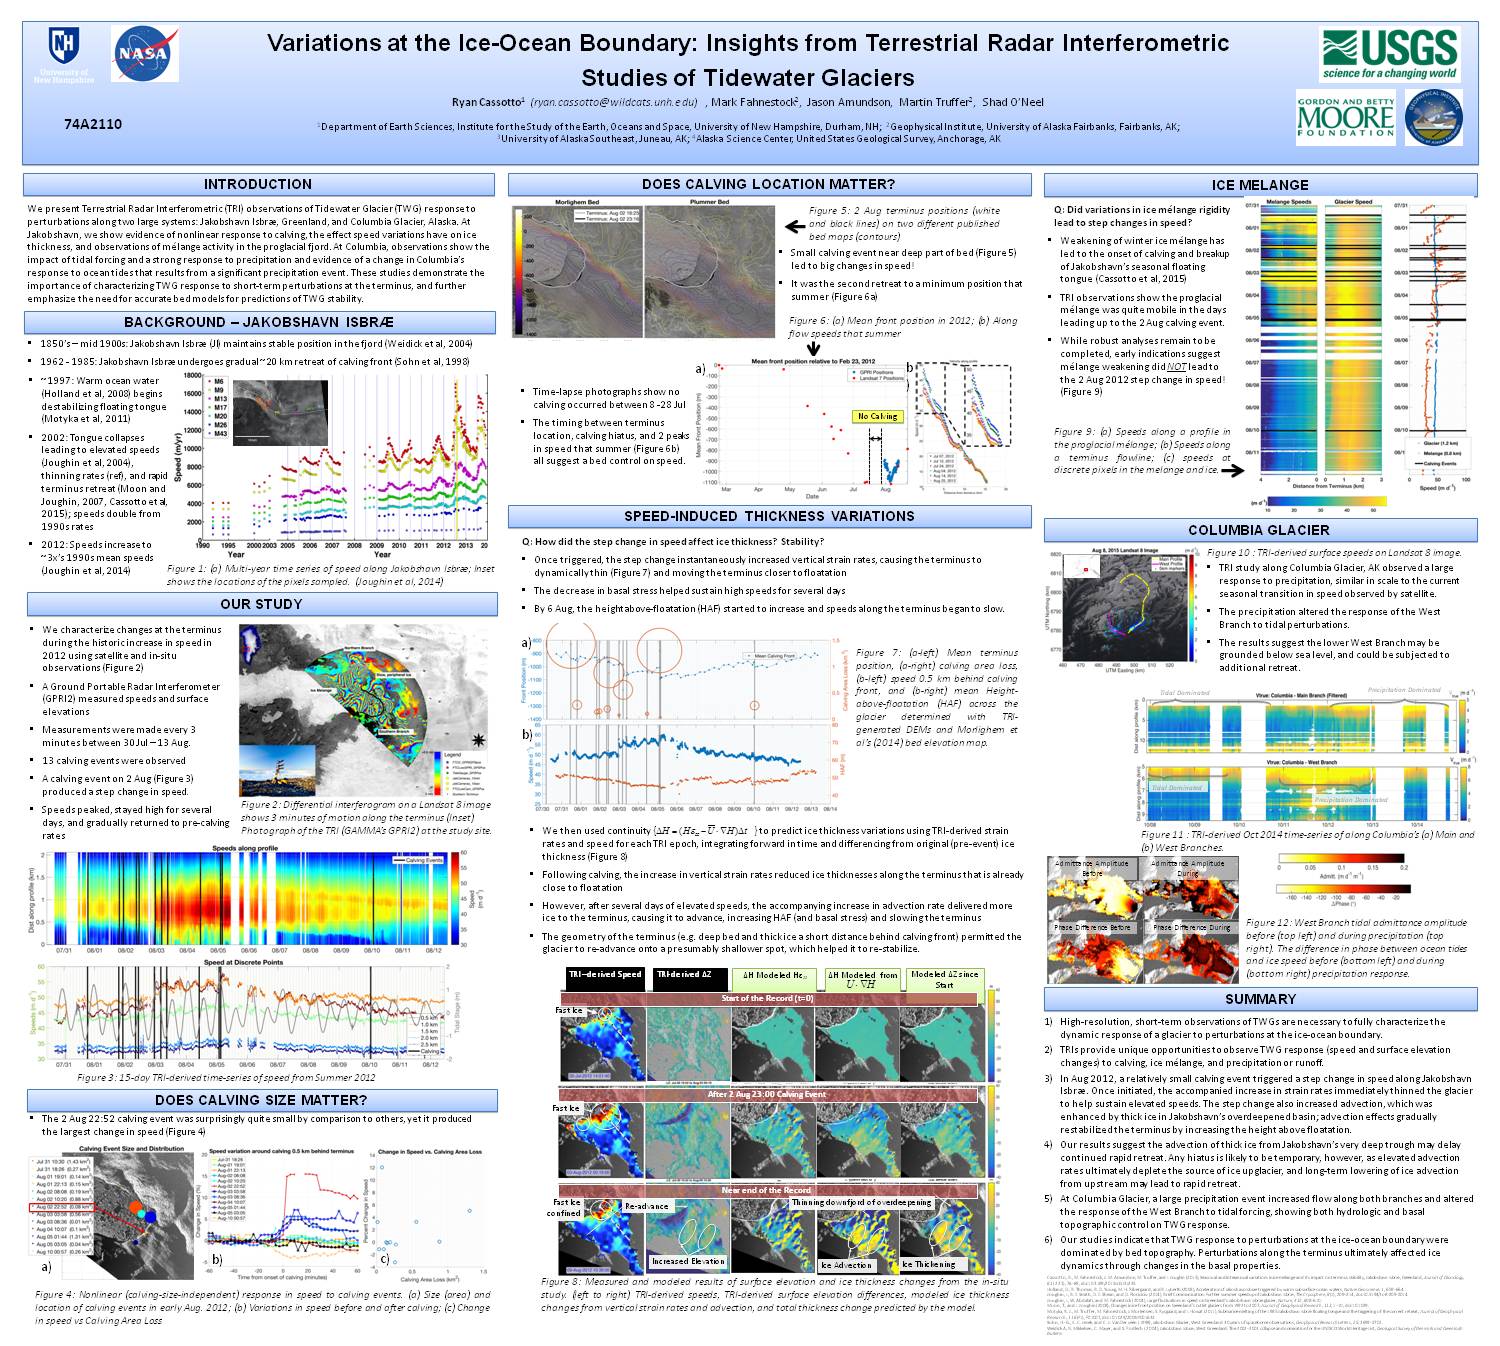 Variations At The Ice-Ocean Boundary: Insights From Terrestrial Radar Interferometric Studies Of  Tidewater Glaciers by rkp4